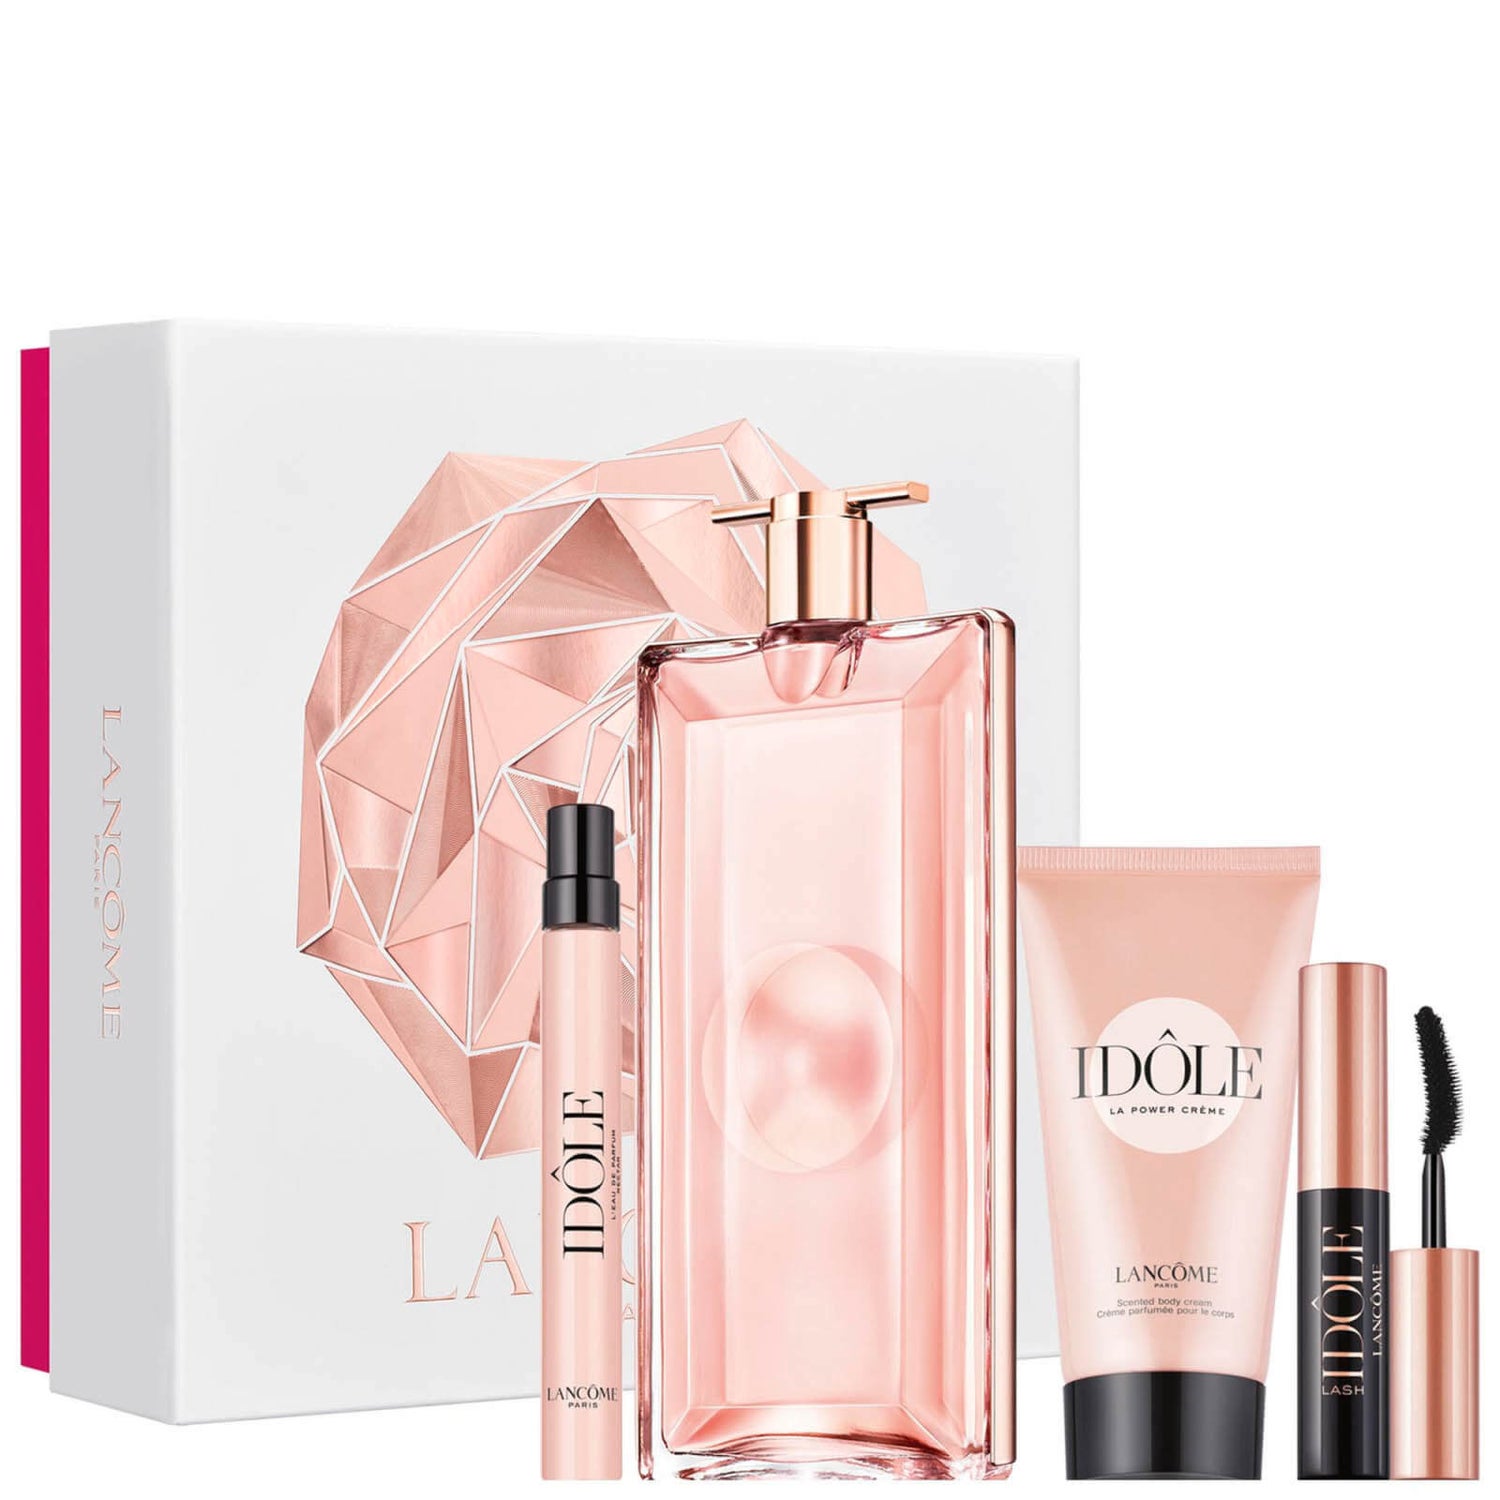 Lancôme Idôle Eau De Parfum 100ml Holiday Gift Set For Her (Worth £130.00)